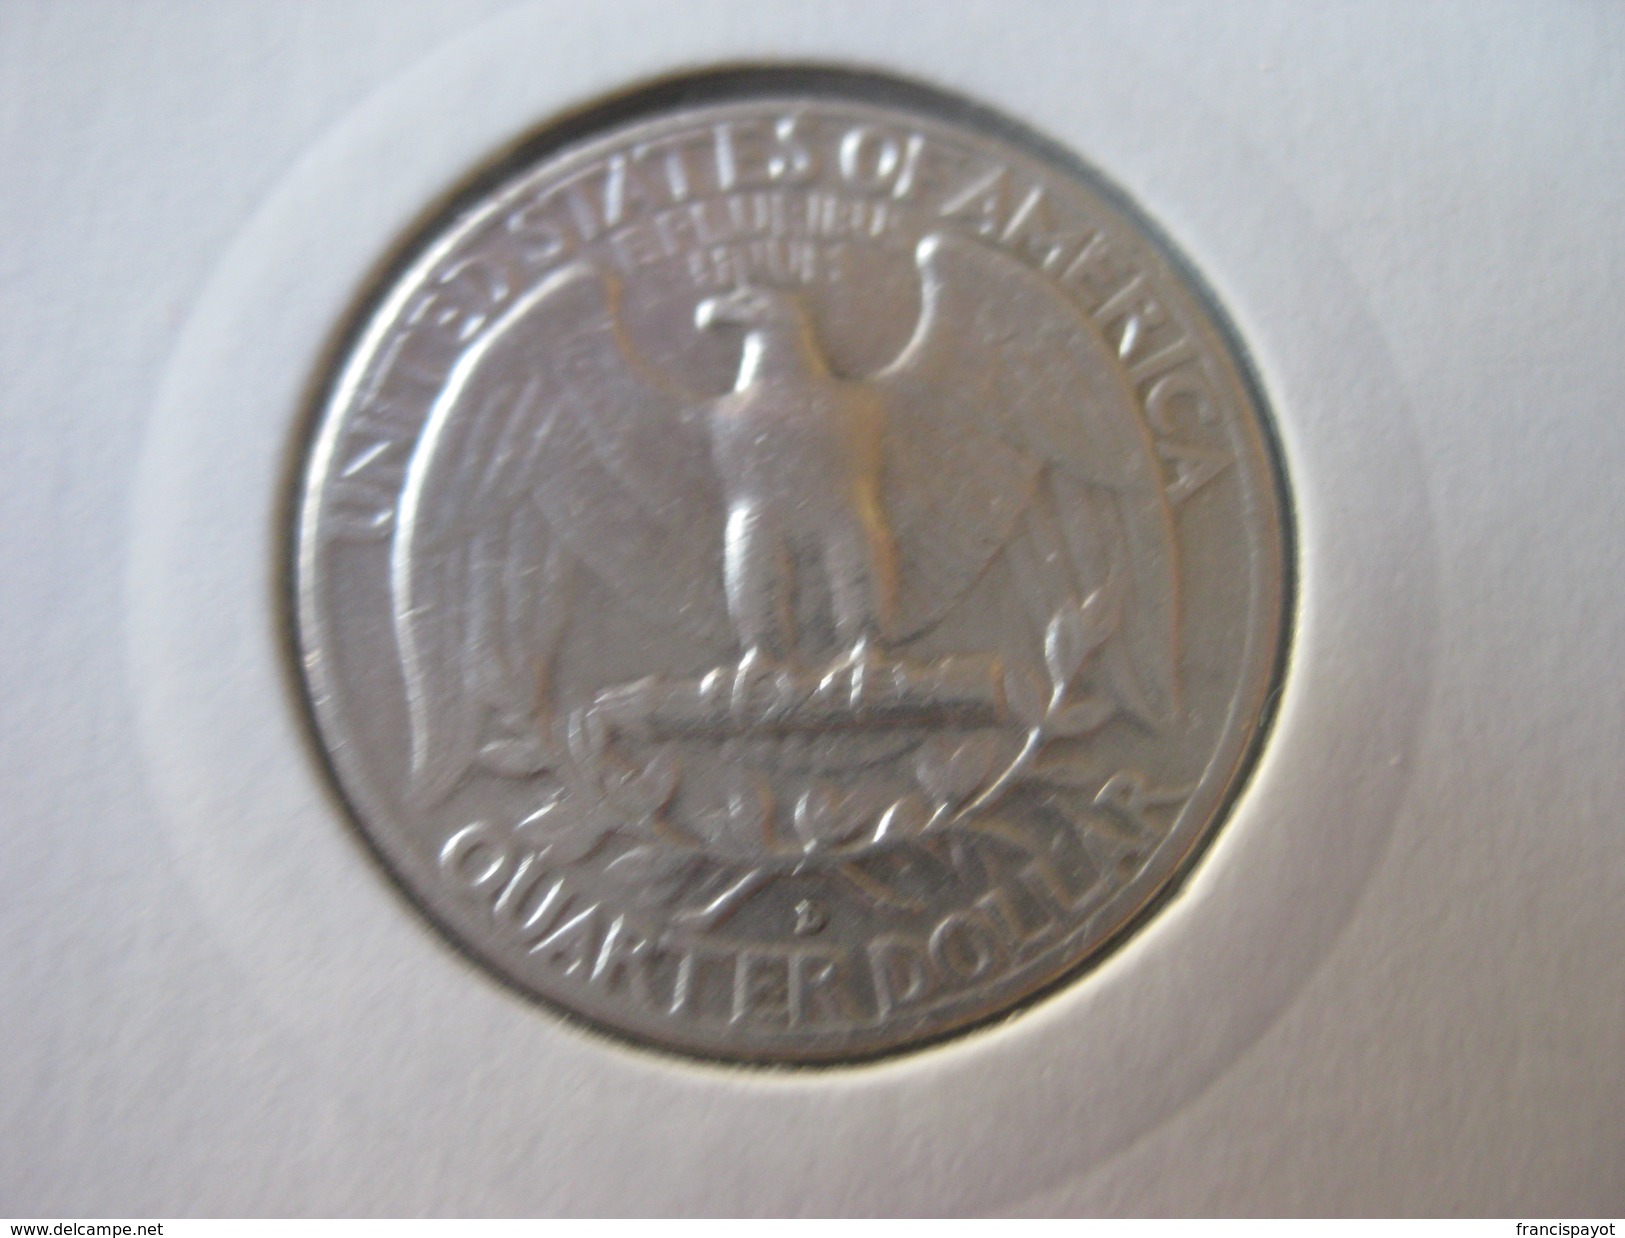 USA Quarter Dollar 1958 D - 1932-1998: Washington